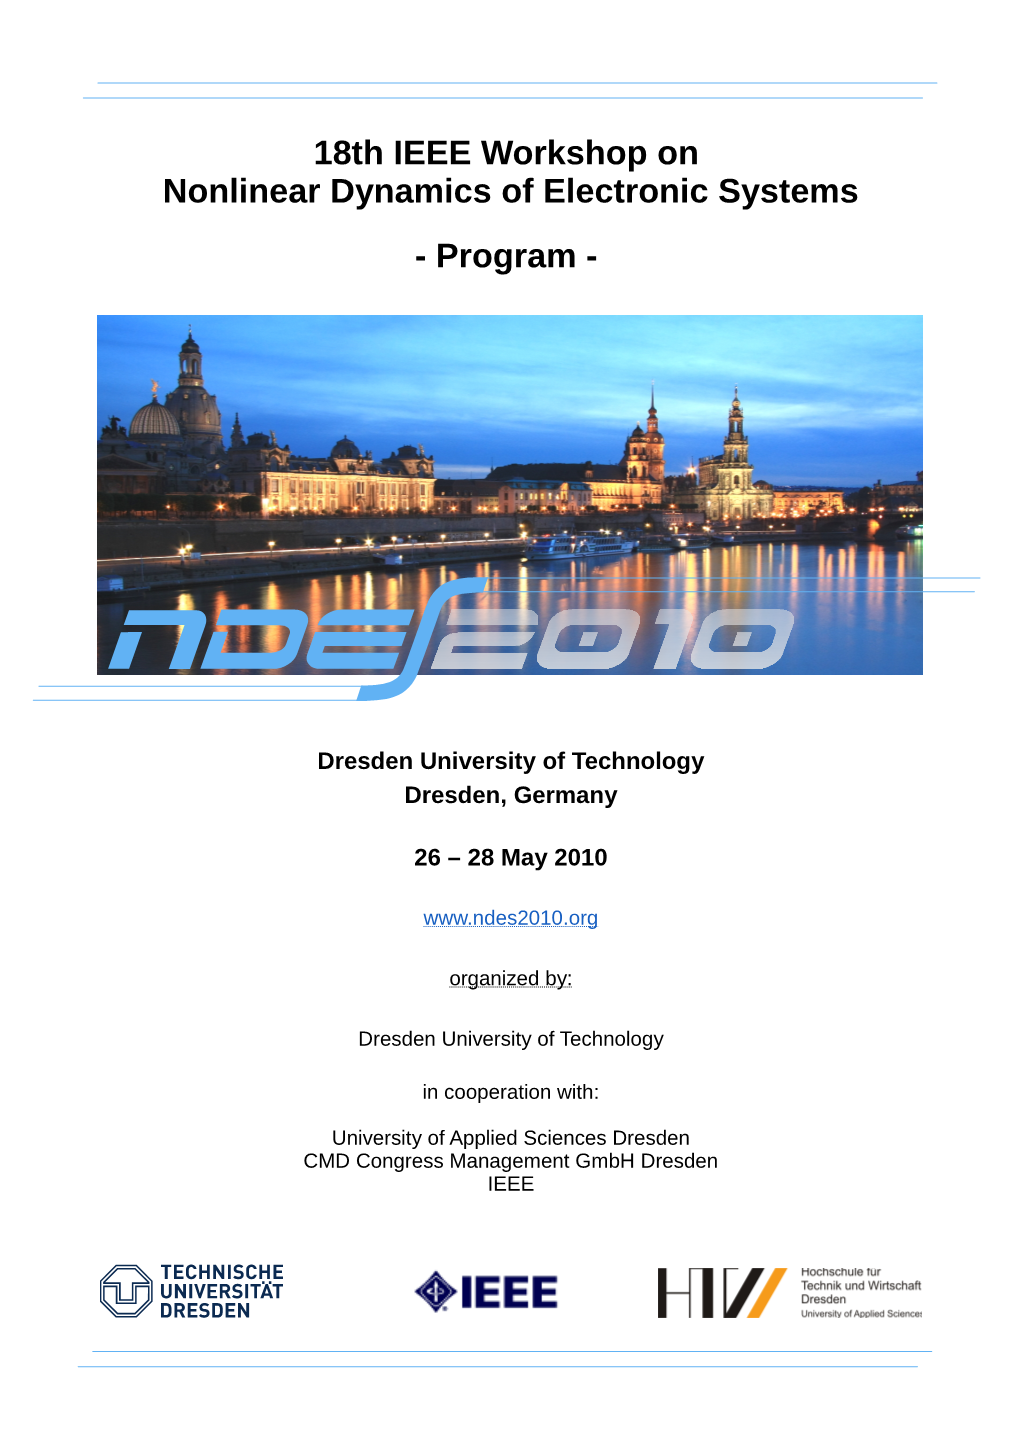 Program of NDES 2010, Dresden, Germany